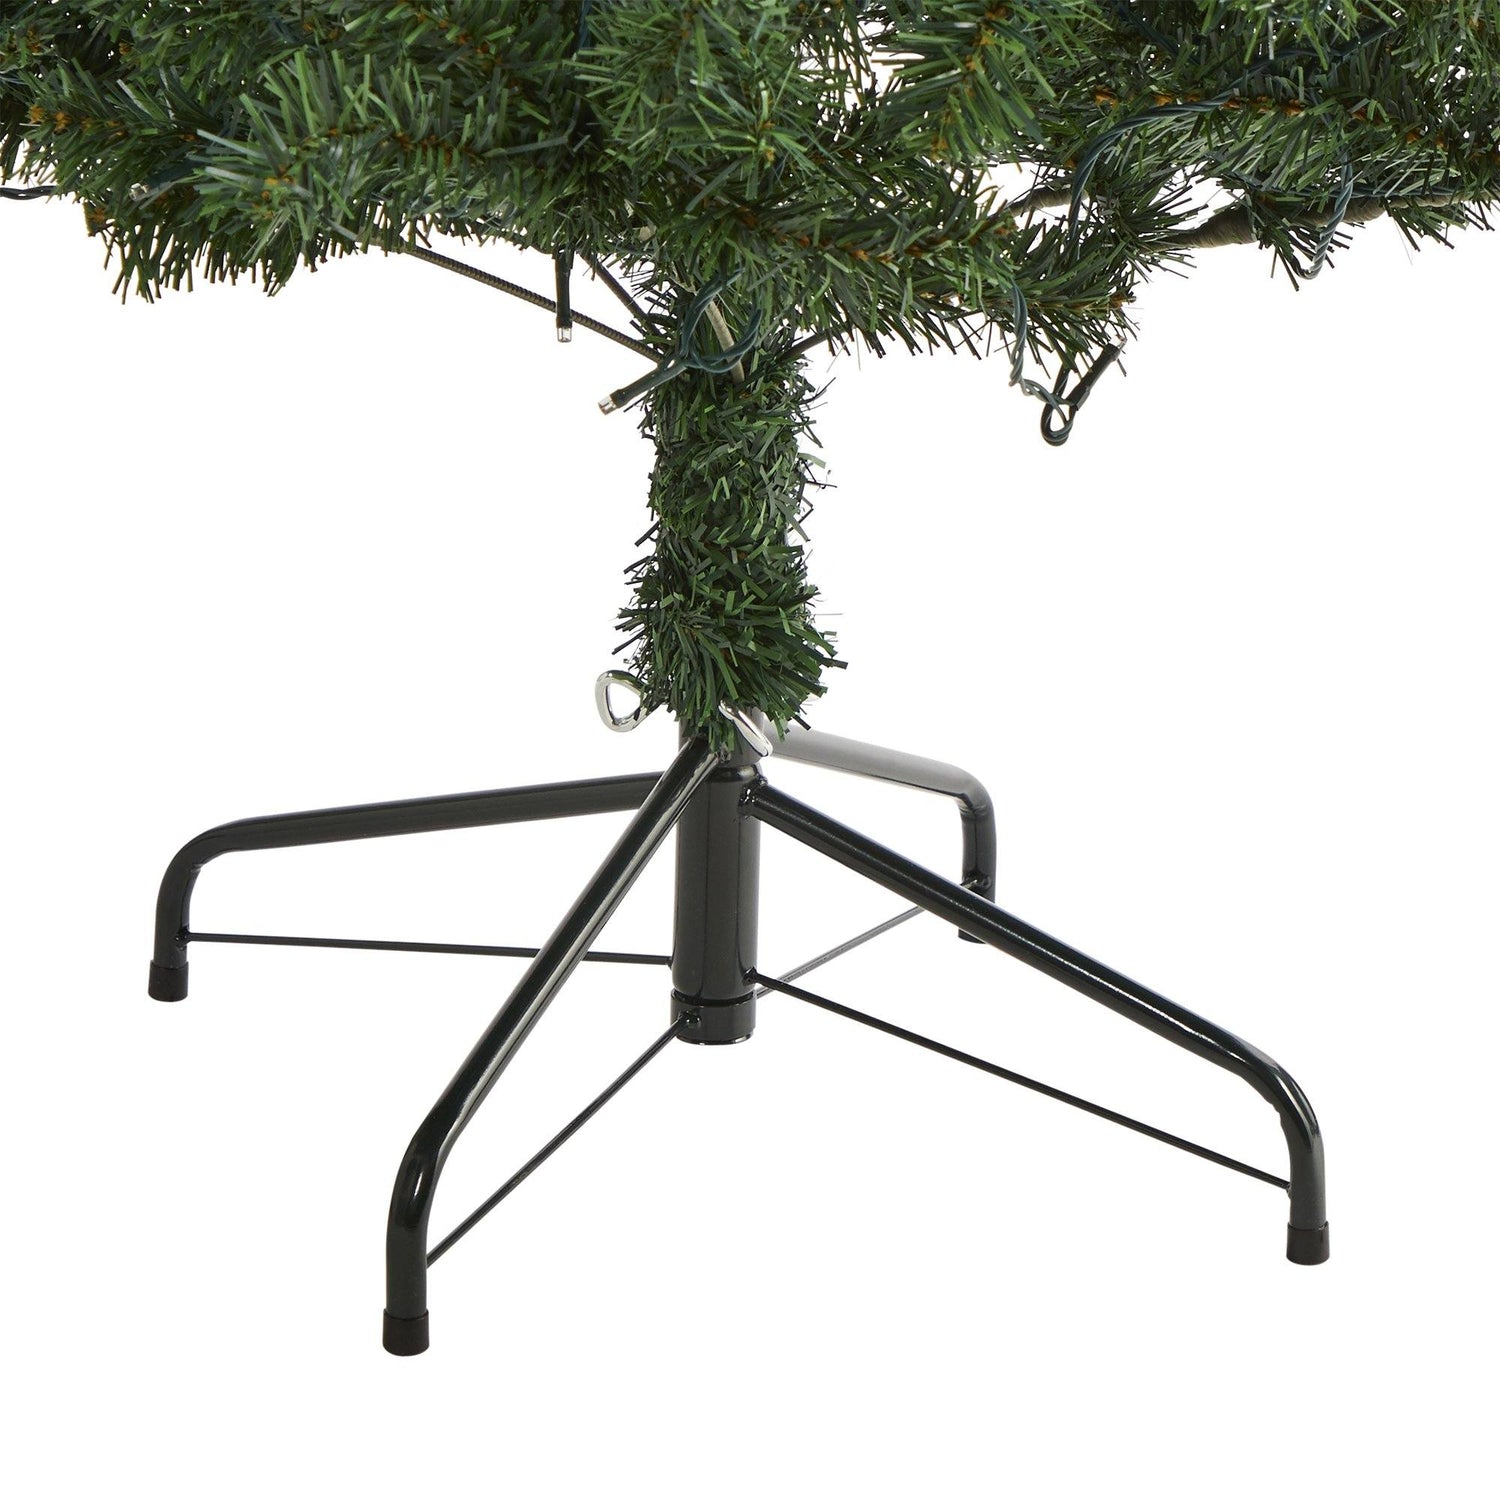 7' Northern Tip Pine Artificial Christmas Tree